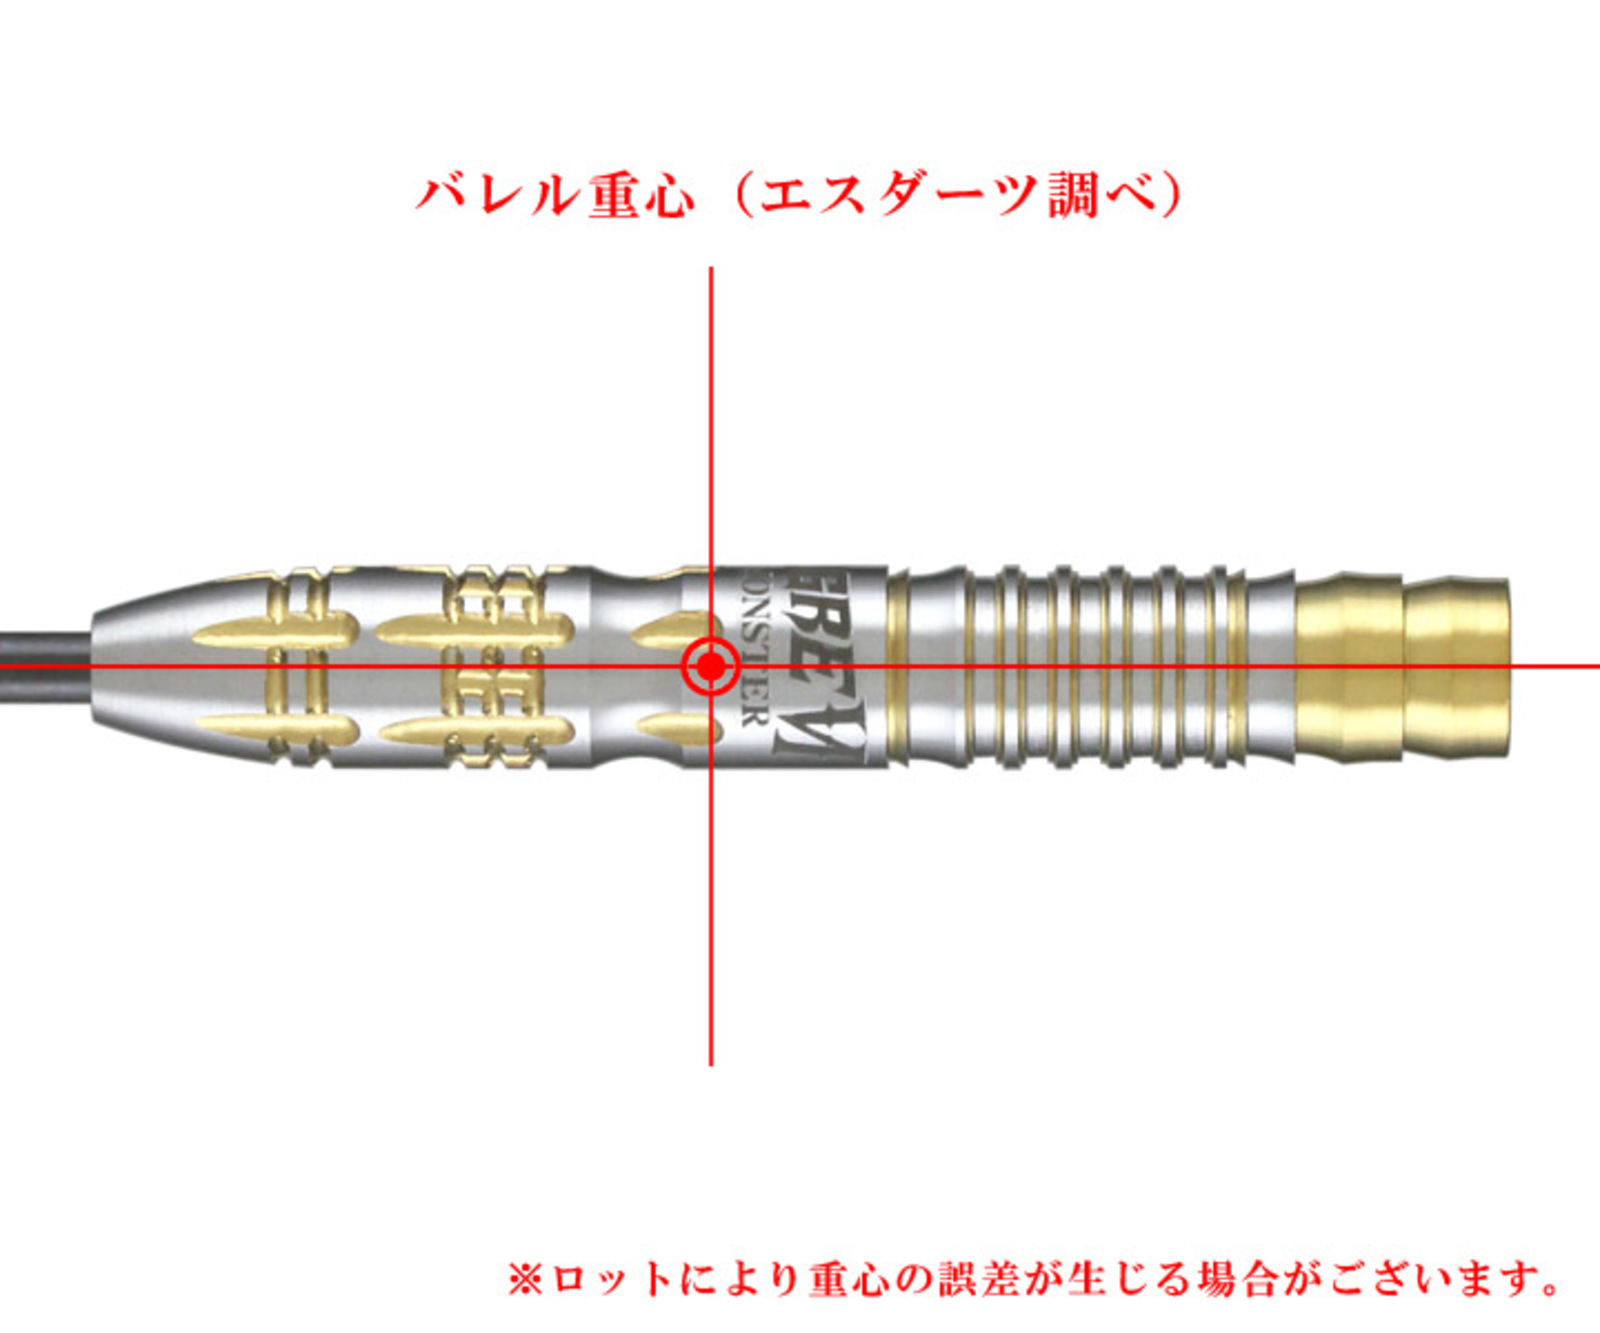 MONSTER】OGRE VI Morihiro Hashimoto Model STEEL 22g | Darts Online 